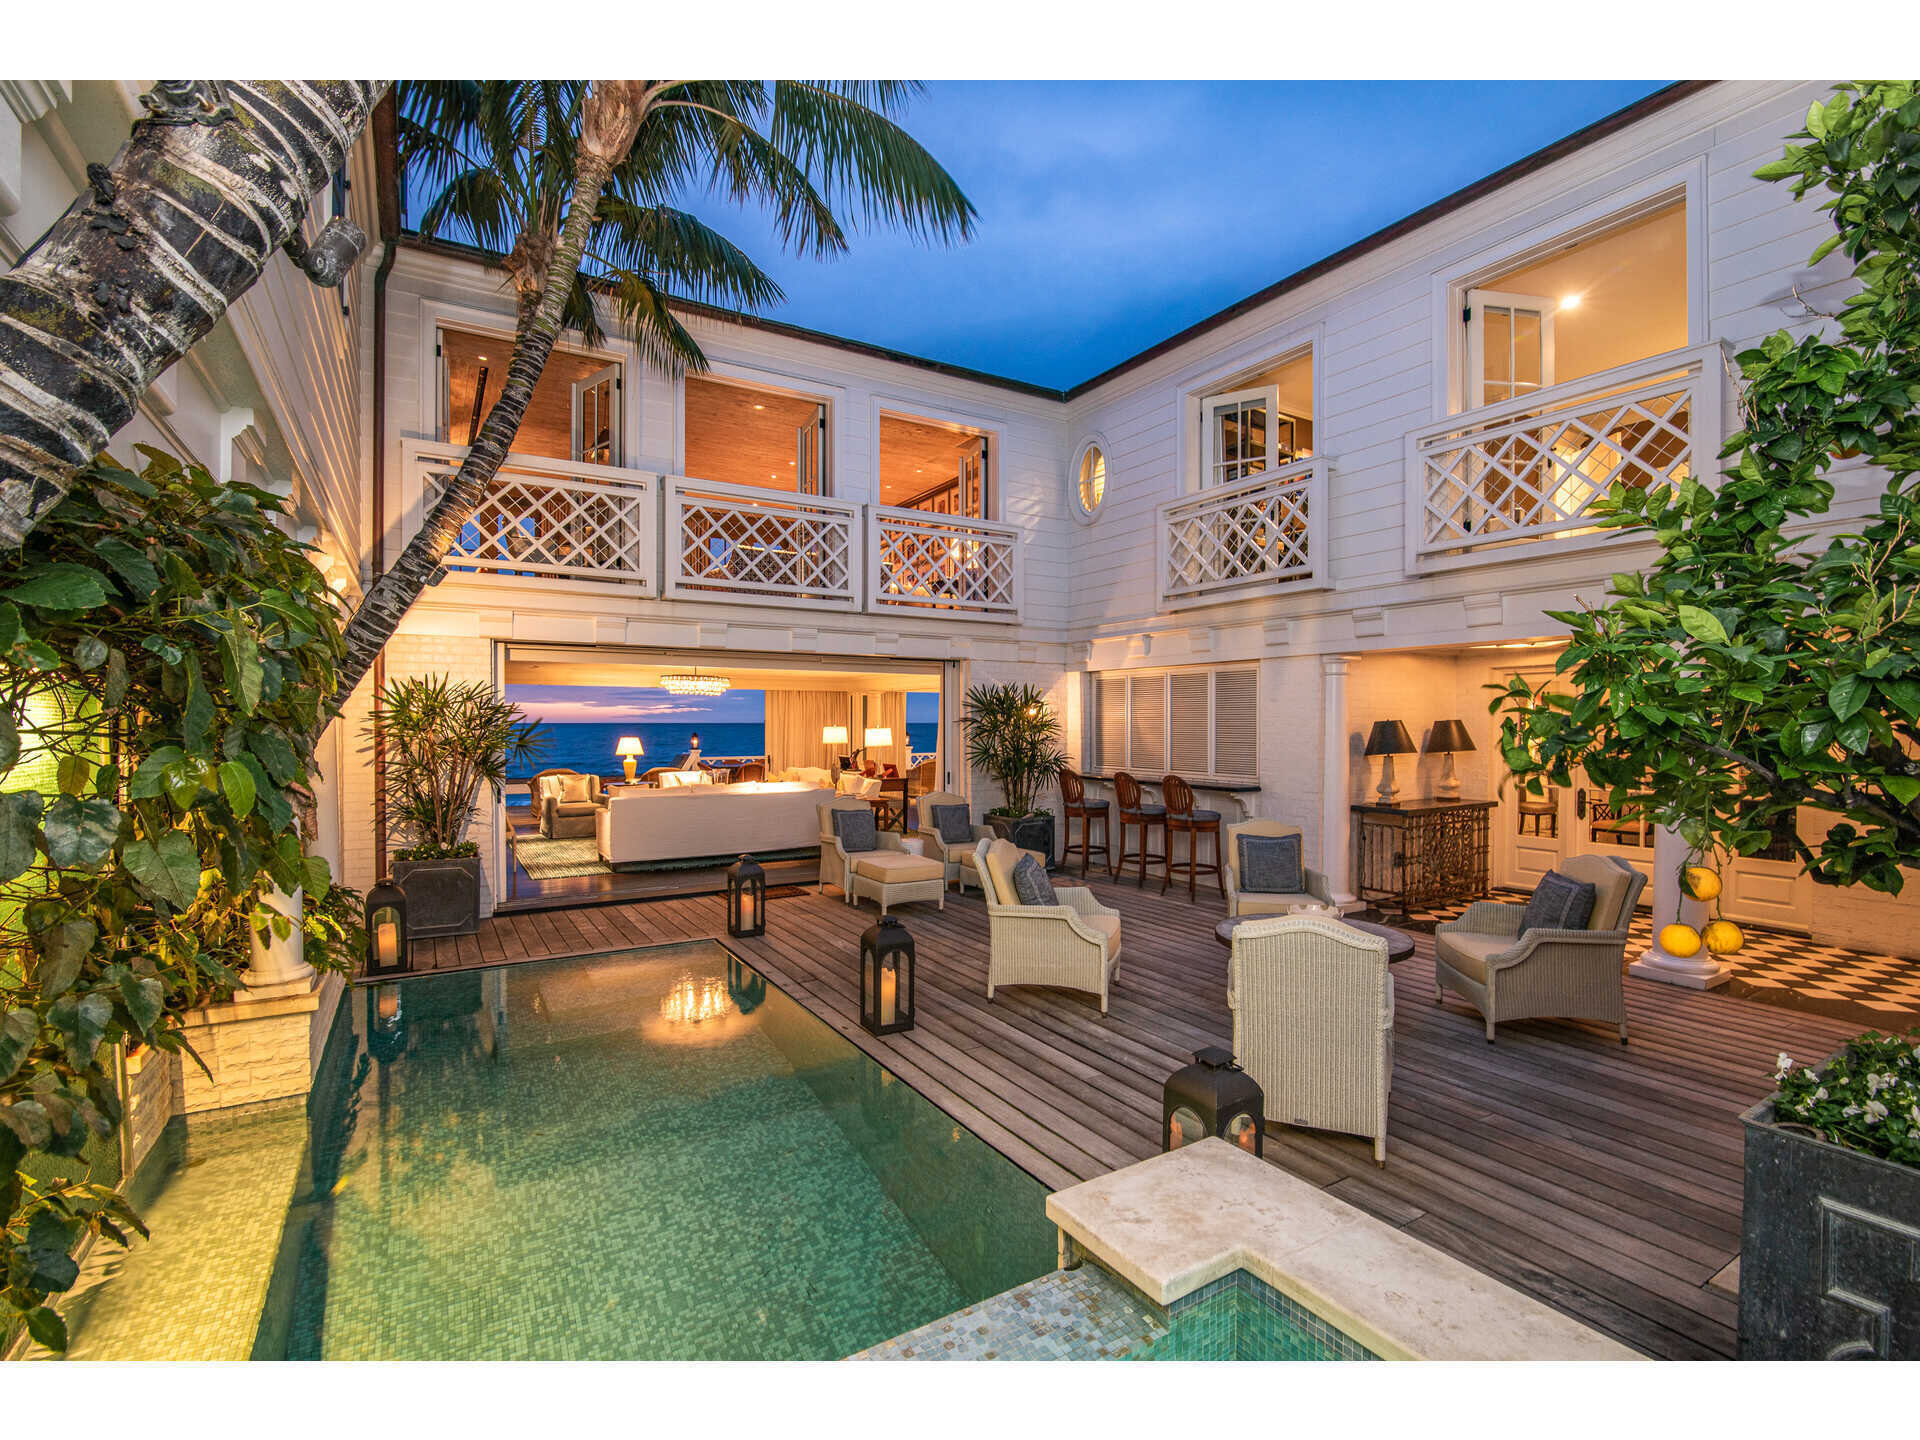 Francis York A Resort Developer’s Oceanfront Malibu Mansion17.jpg